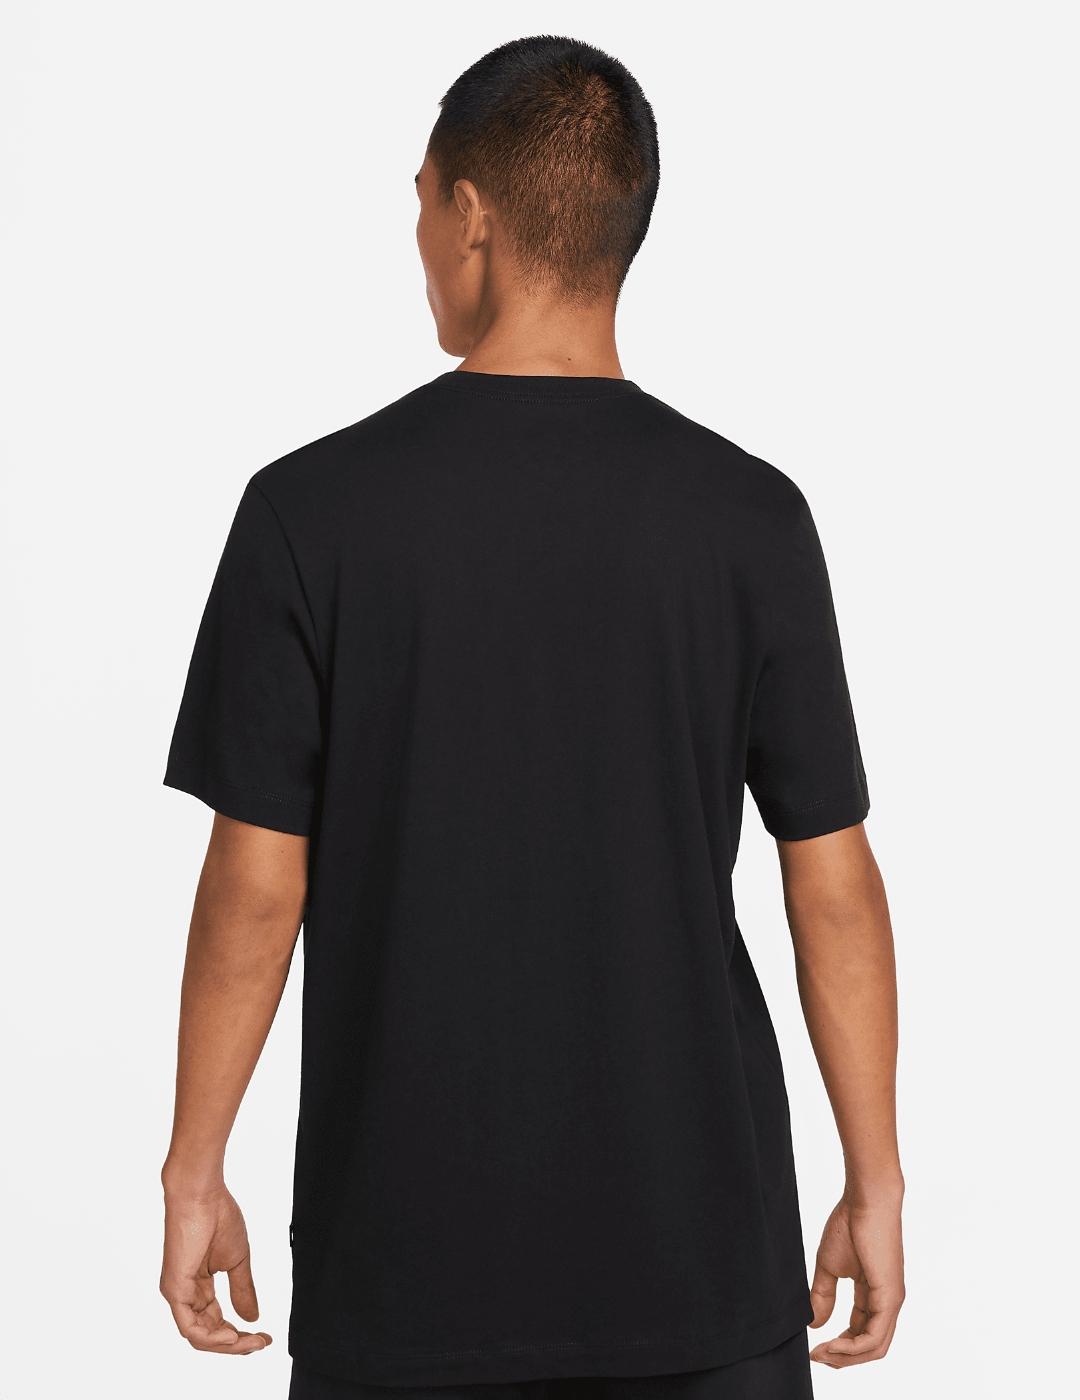 Camiseta Nike Sportswear Negra con dibujo hombre negra